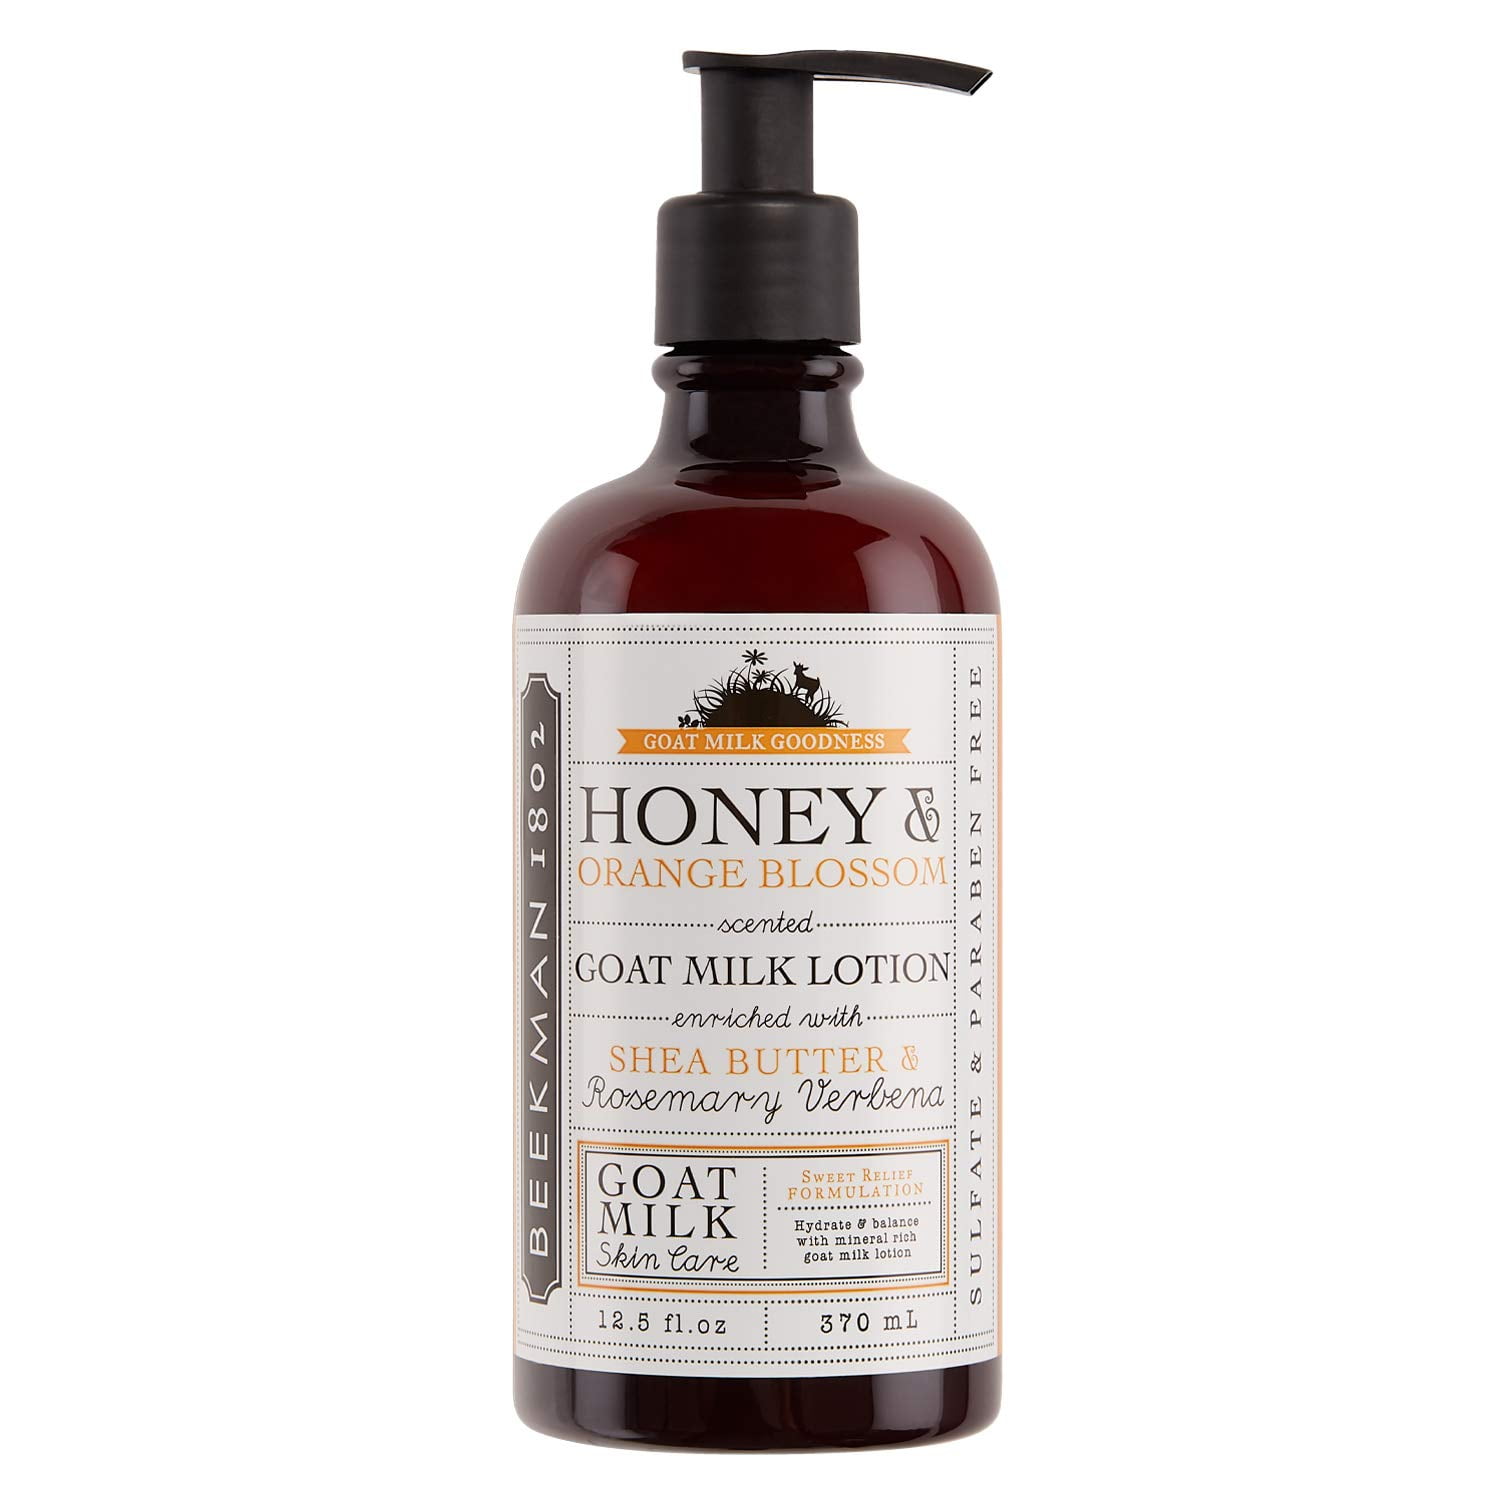 Beekman 1802 Goat Milk Soap Bar Honey & Orange Blossom - 9 oz - Nourishes  Moisturizes & Hydrates the Body - Good for Sensitive Skin - Cruelty Free